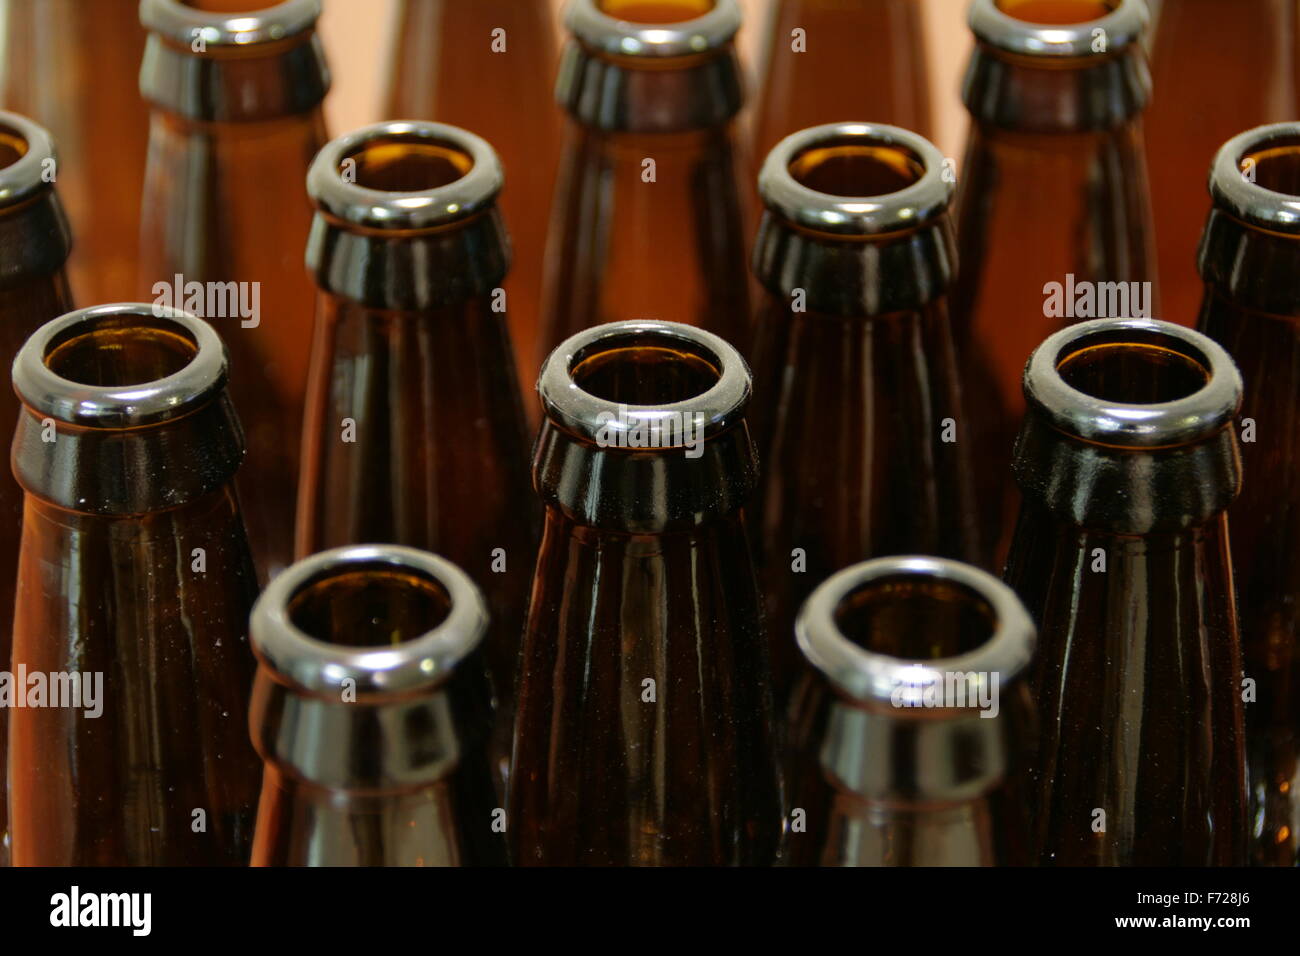 Rows of empty brown beer bottles. Stock Photo